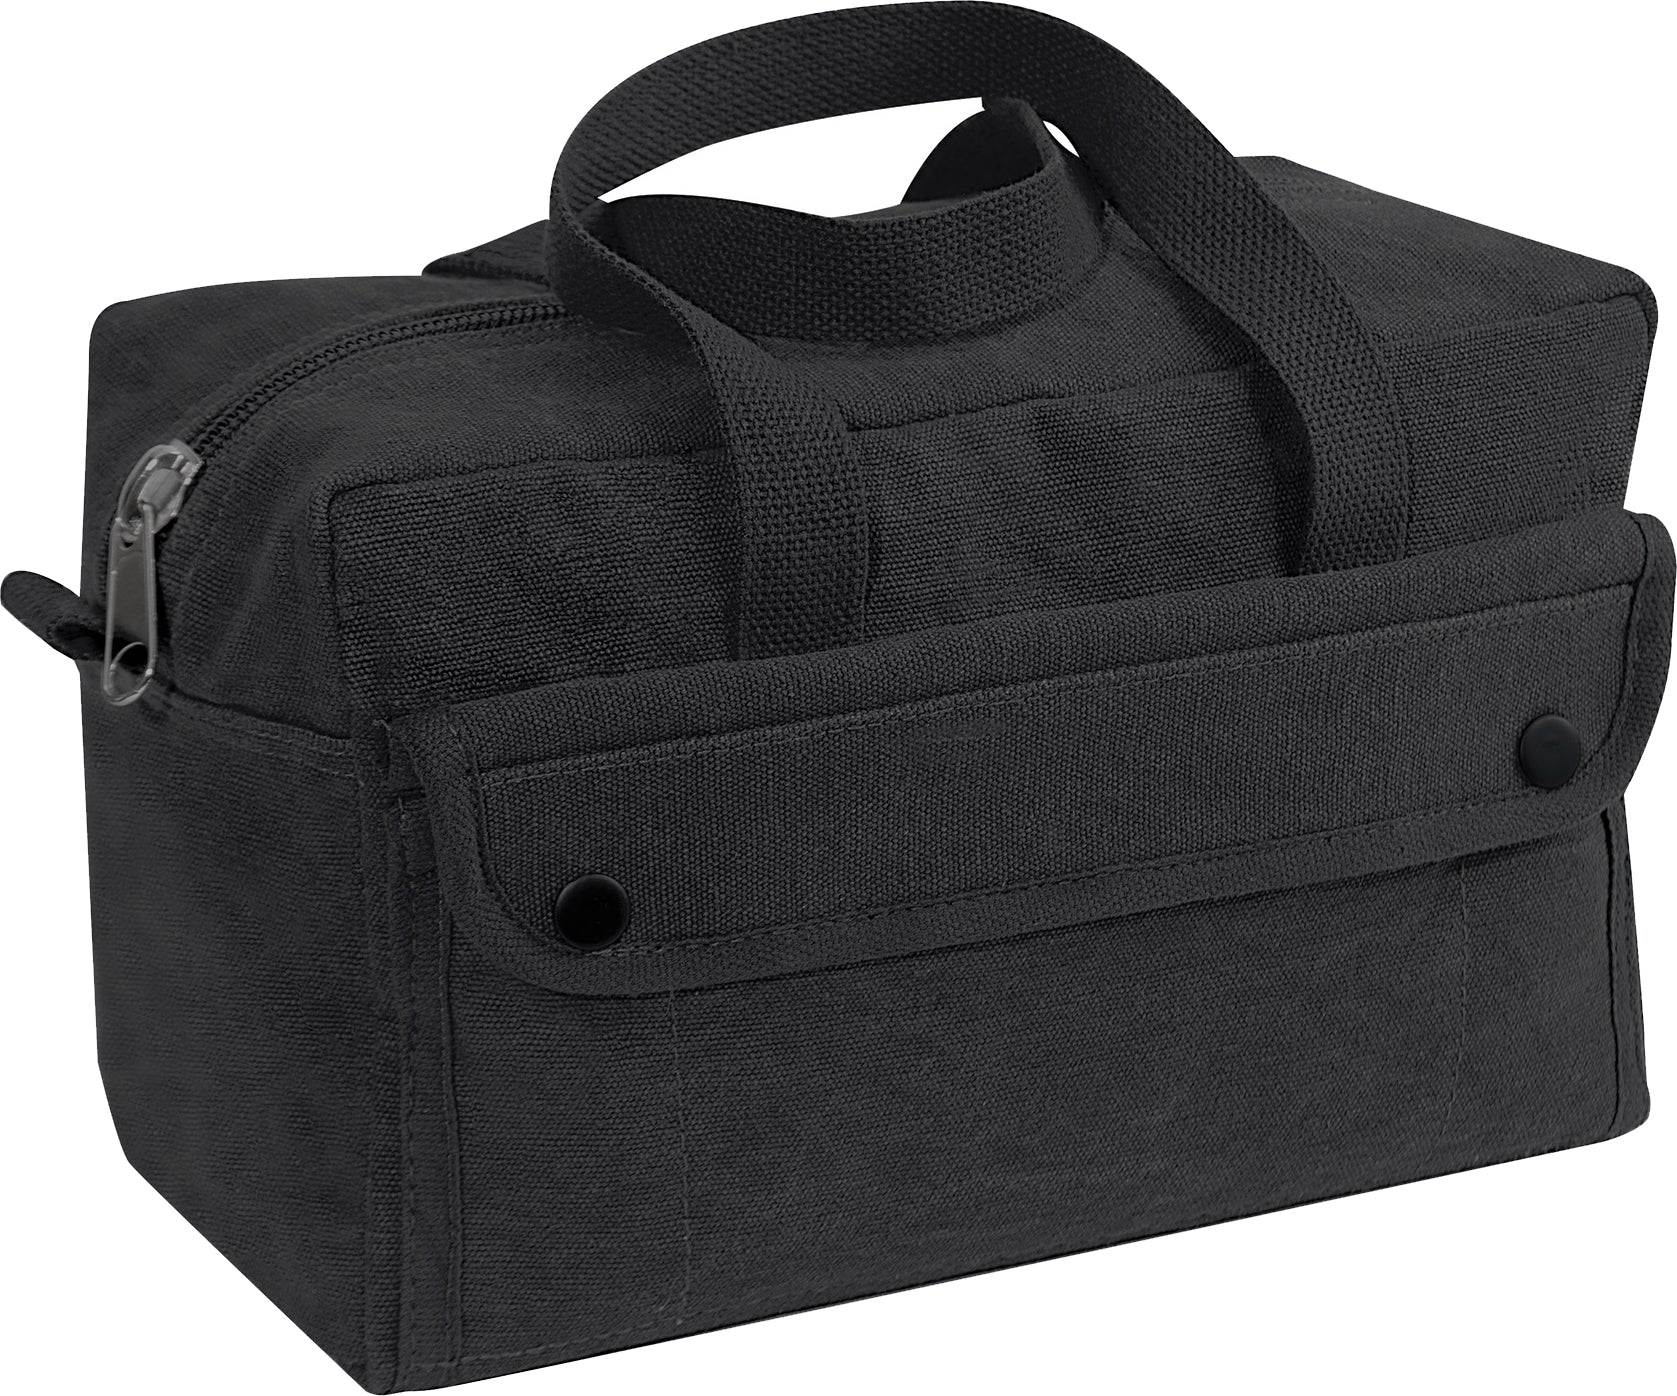 Rothco Heavy Duty Cotton Canvas Mechanic Tools Bag Rugged GI Style, Charcoal Grey